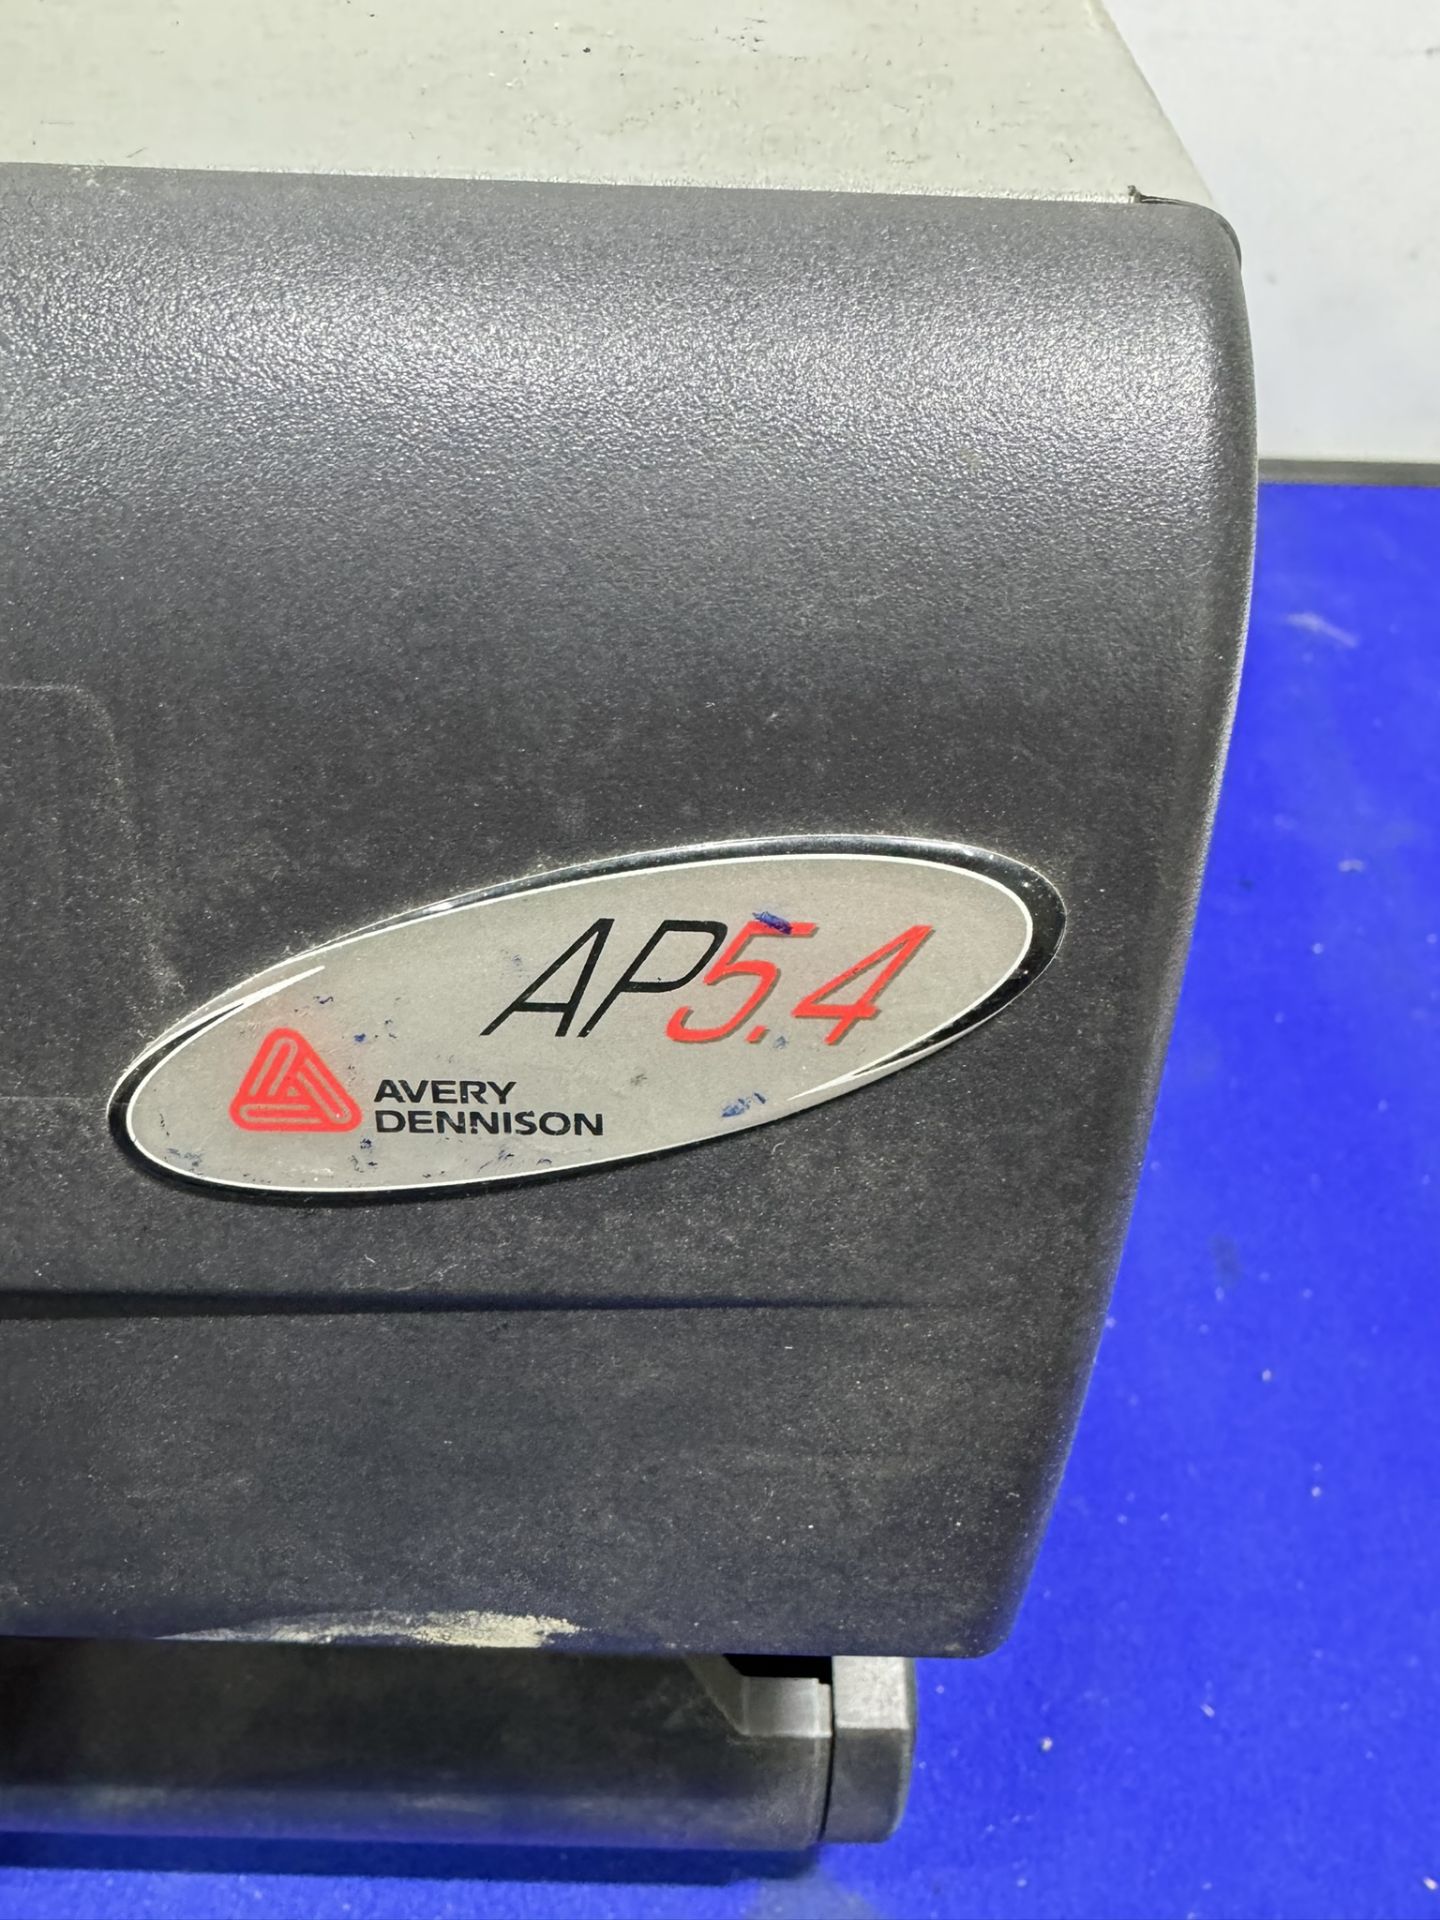 Avery Dennison AP5.4 Label Printer - Image 4 of 8